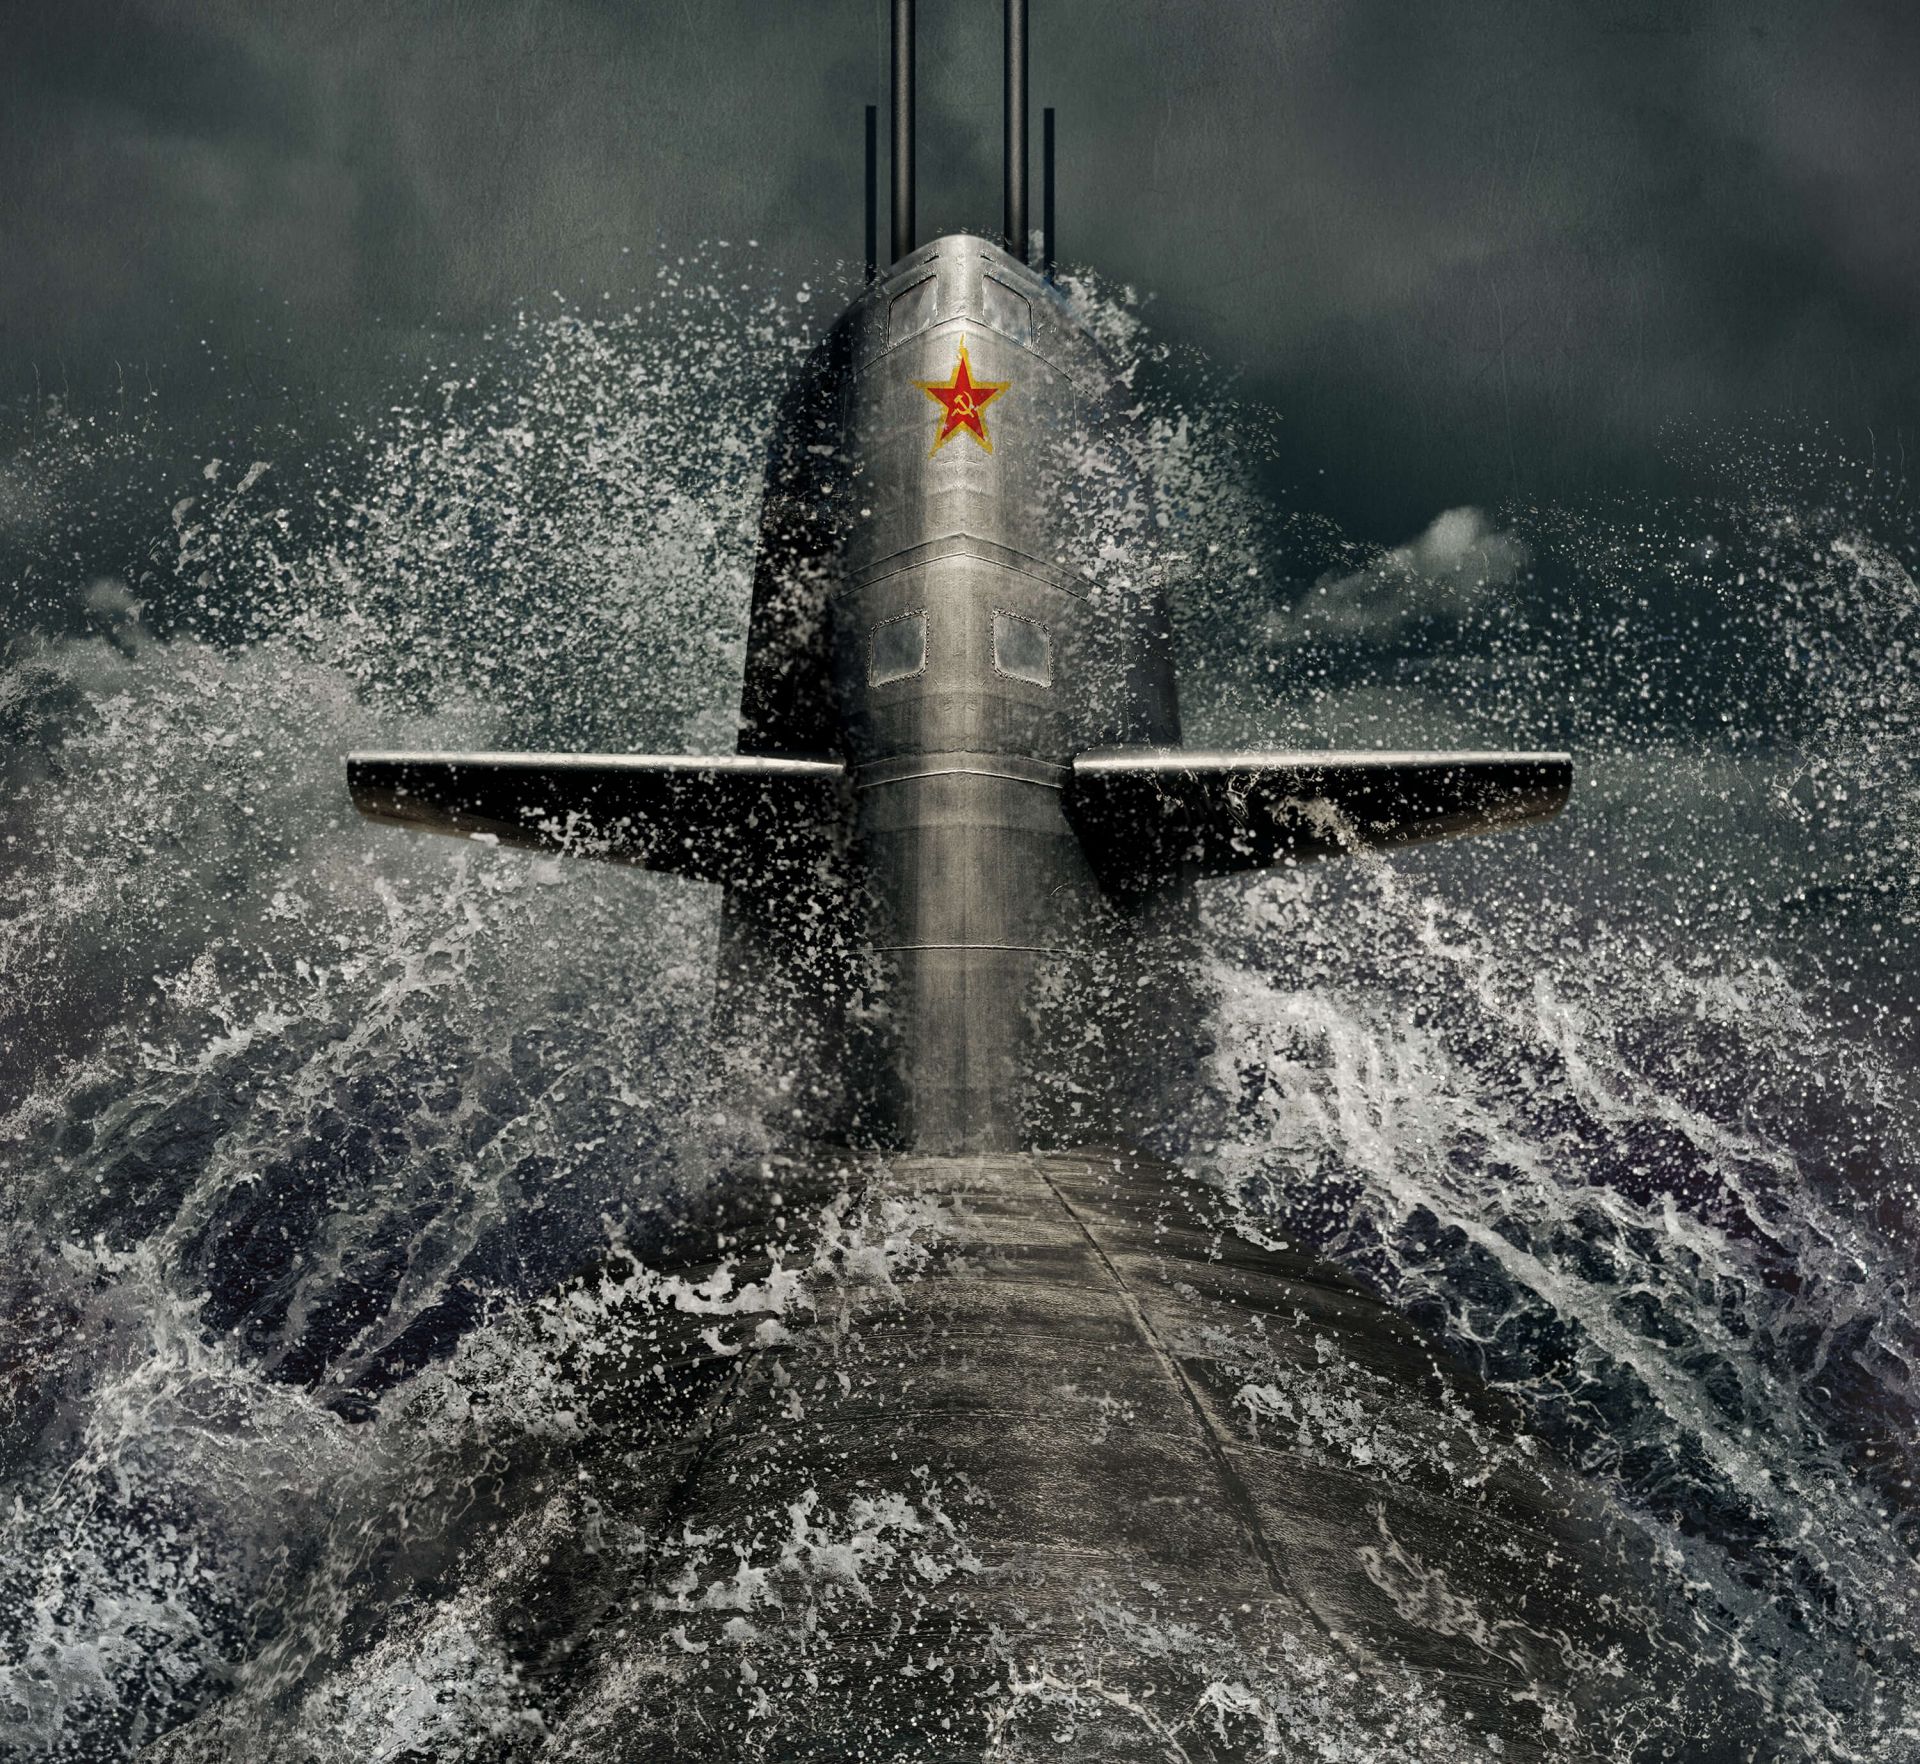 Submarine Images  Free Download on Freepik